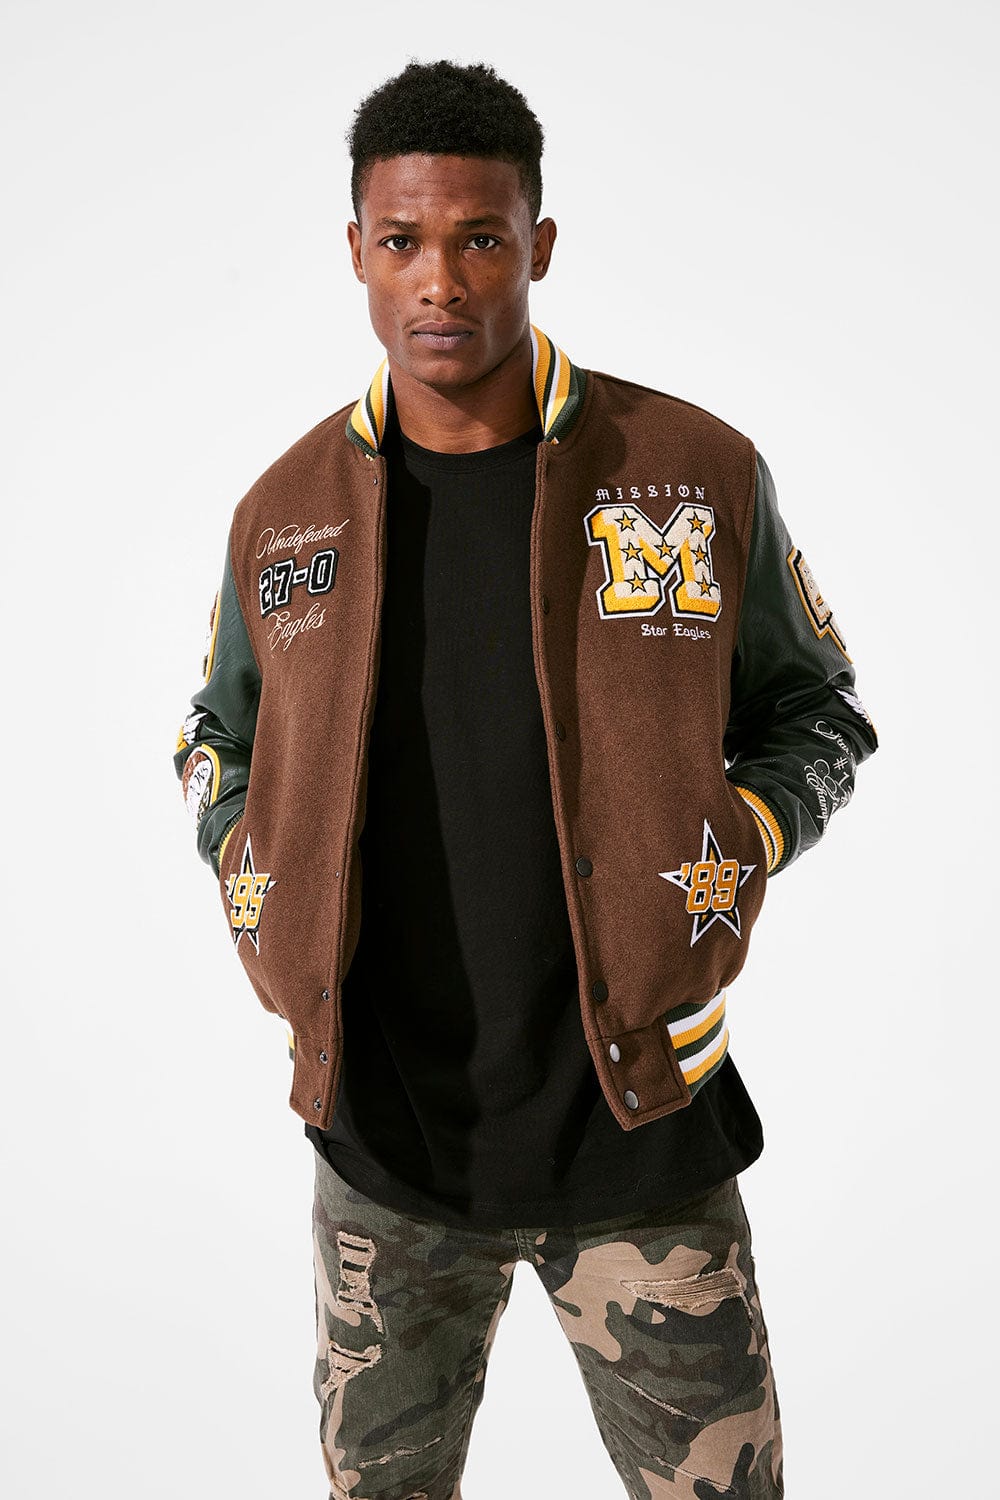 Jordan Craig Star Eagles Varsity Jacket (Mission)